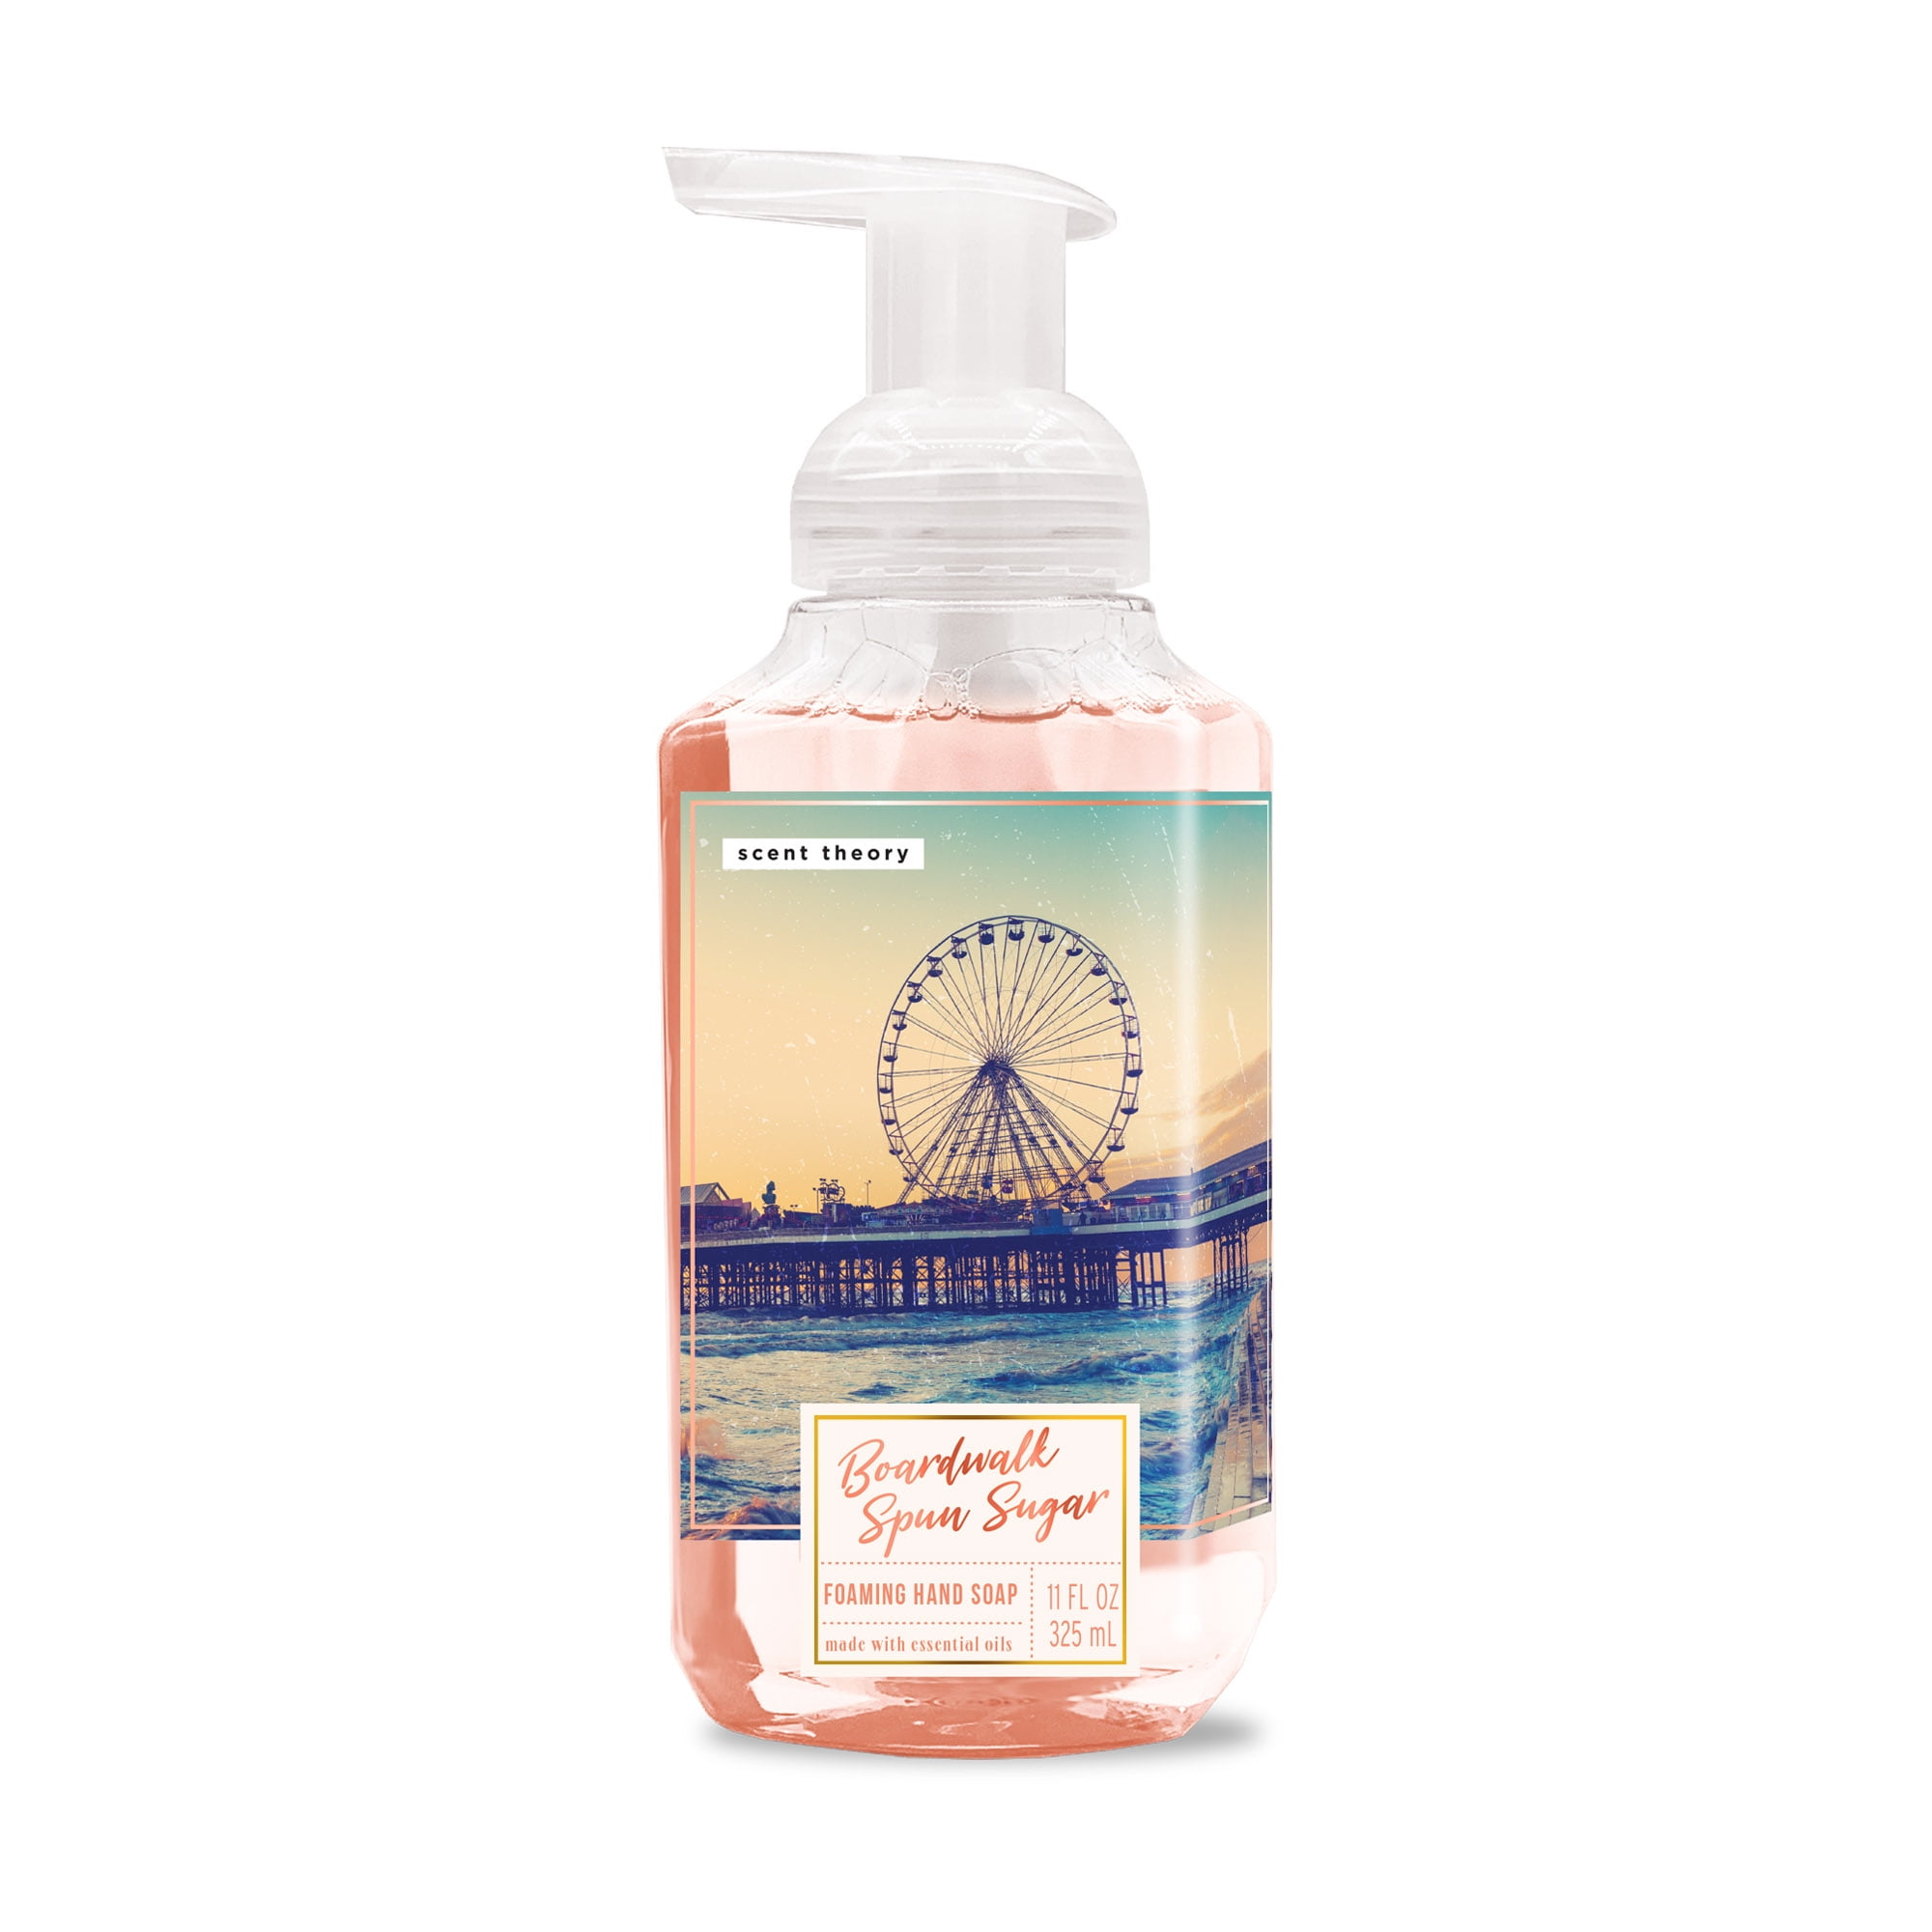 Boardwalk Foaming Hand Soap, Honey Almond Scent, 1 Gallon Bottle · Smith's  Janitorial Supply